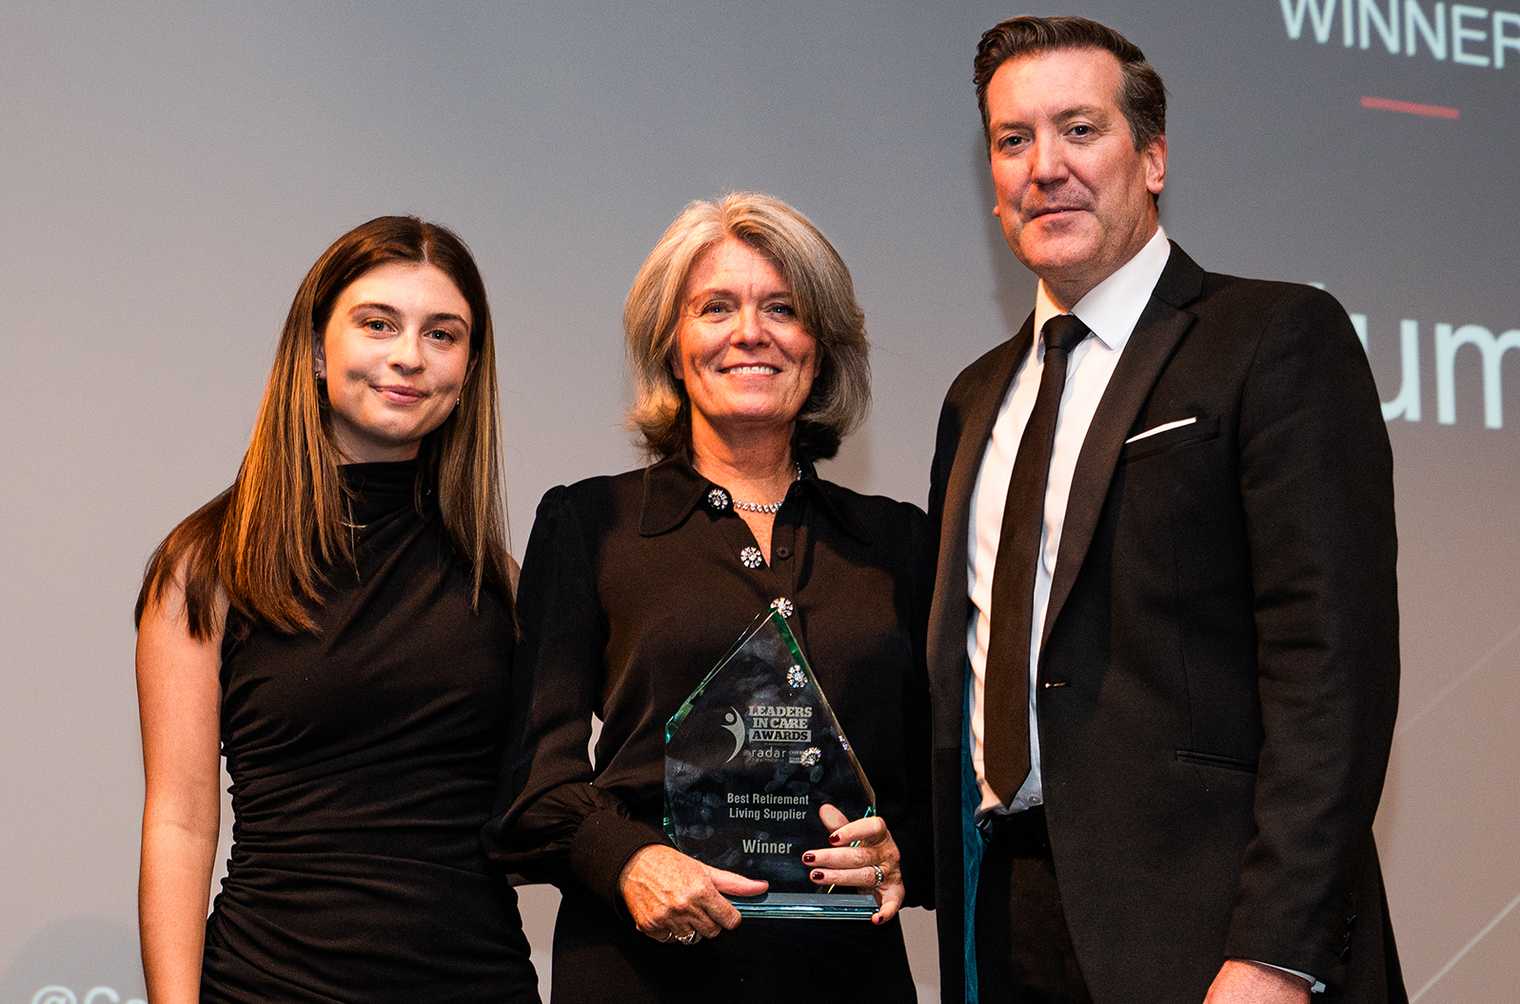 Autumna wins Best Retirement Living Supplier Award